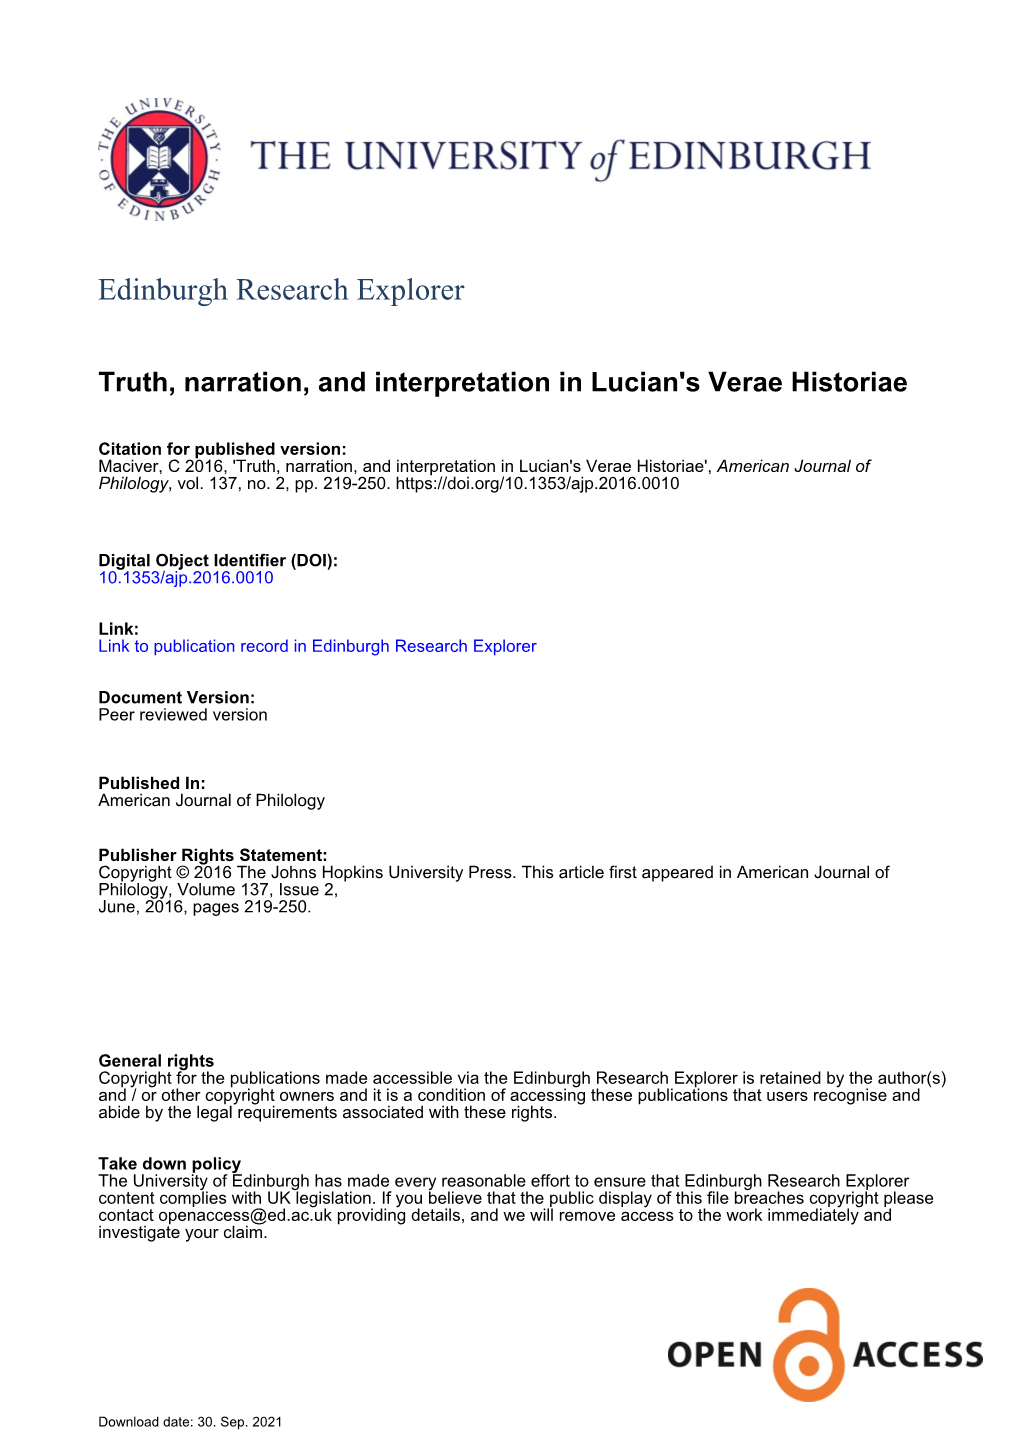 Truth, Narration, and Interpretation in Lucian's Verae Historiae